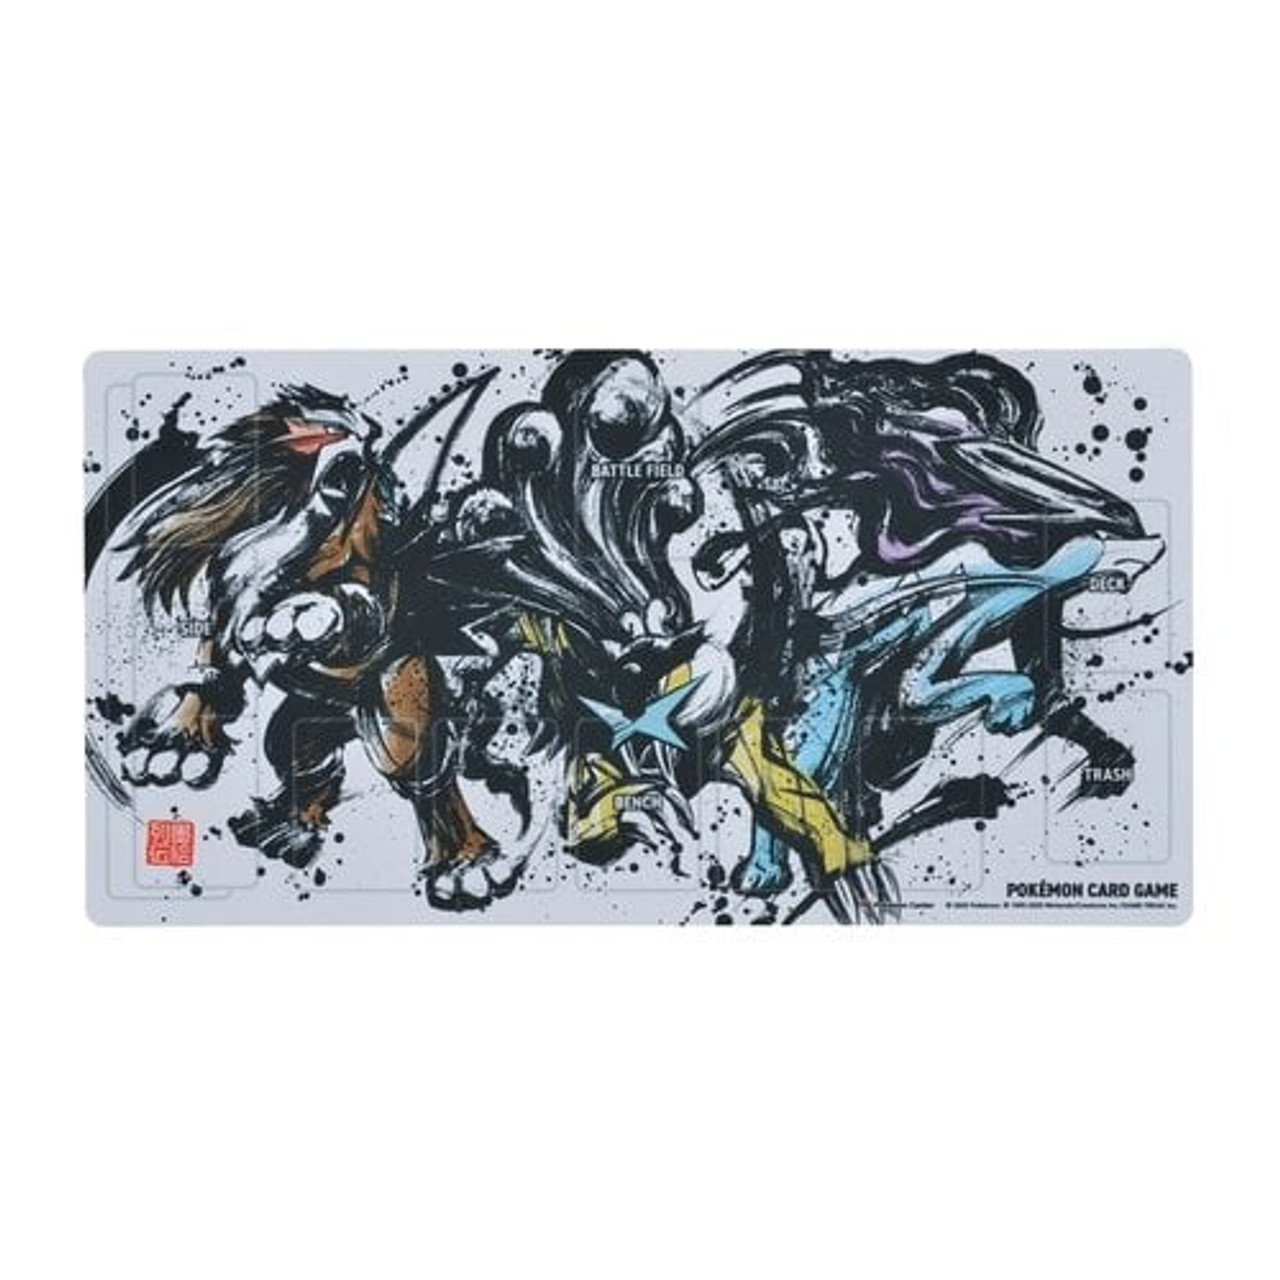 Raikou, Entei & Suicune Legendary Jumbo Pokemon card